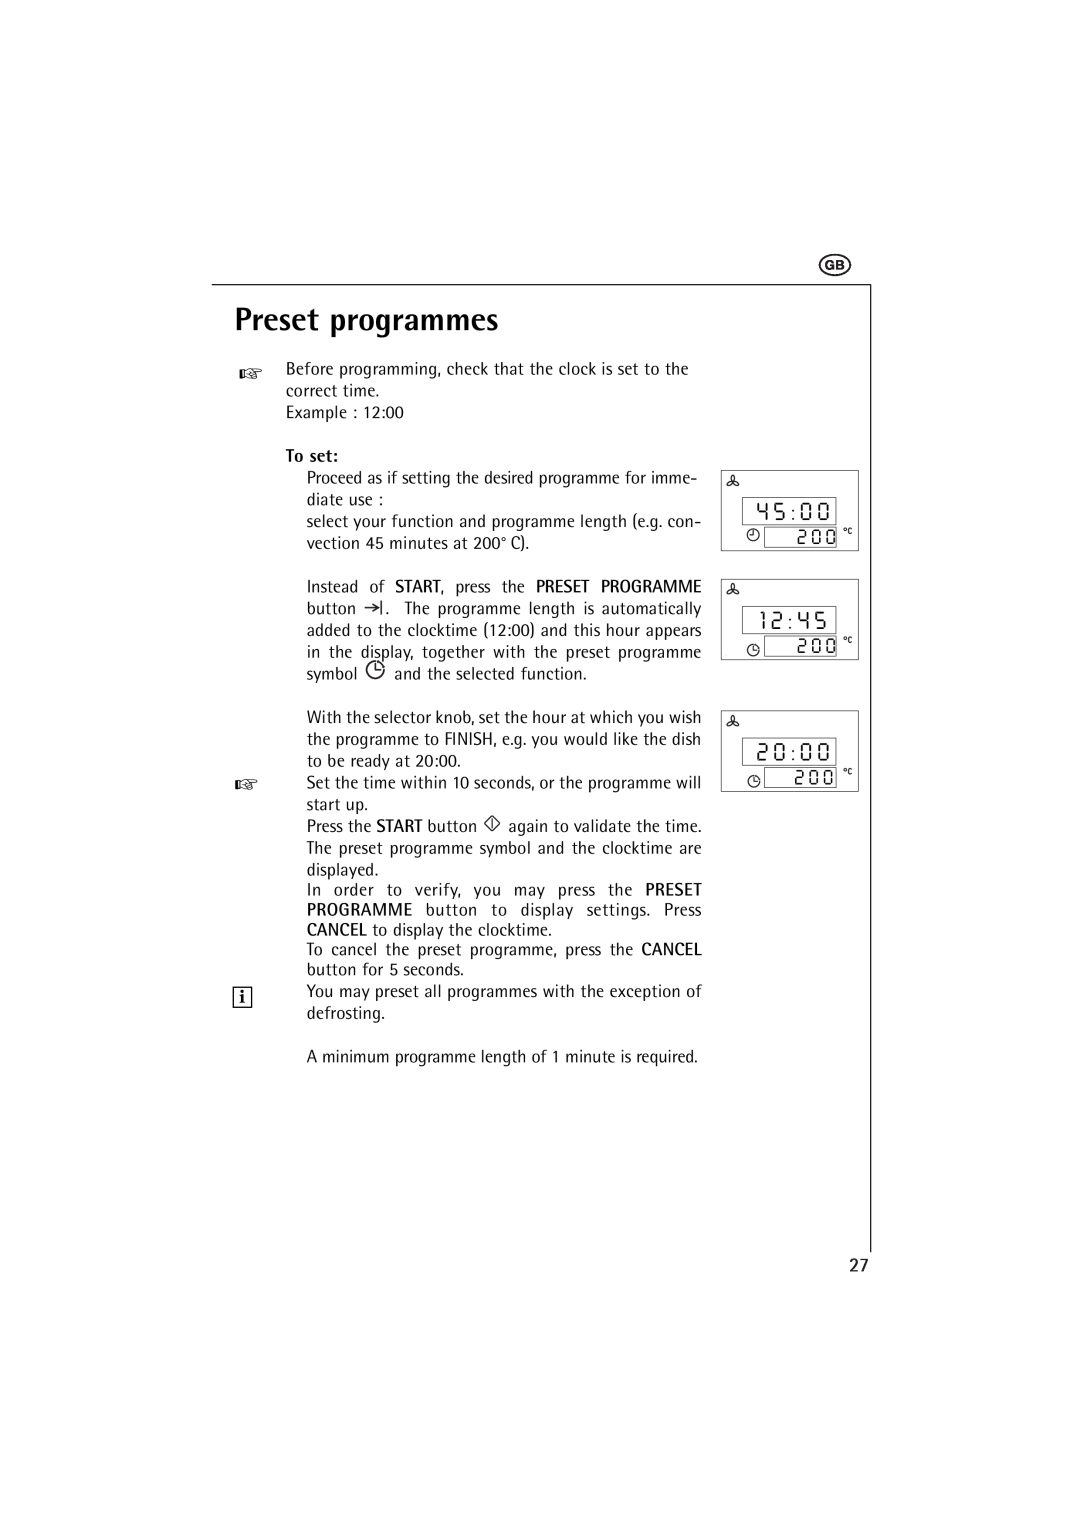 AEG MCC 663 instruction manual Preset programmes, 4 5, 1 2, To set 